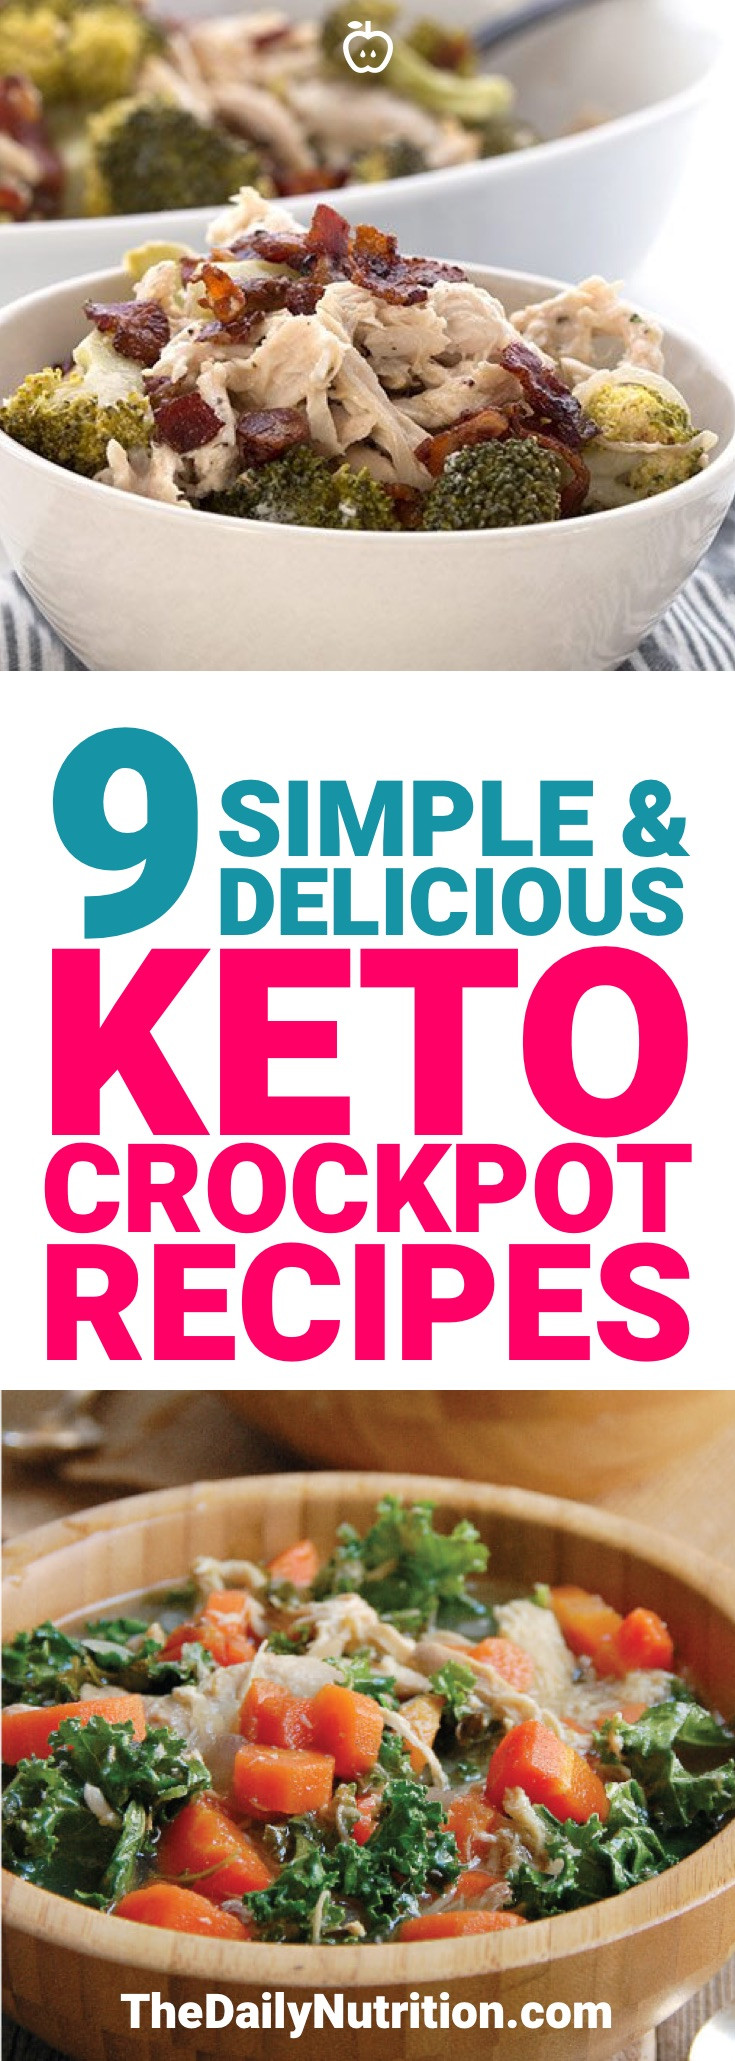 Keto Diet Recipes Easy Crock Pot
 9 Delicious & Simple Keto Crockpot Recipes to Make Tonight